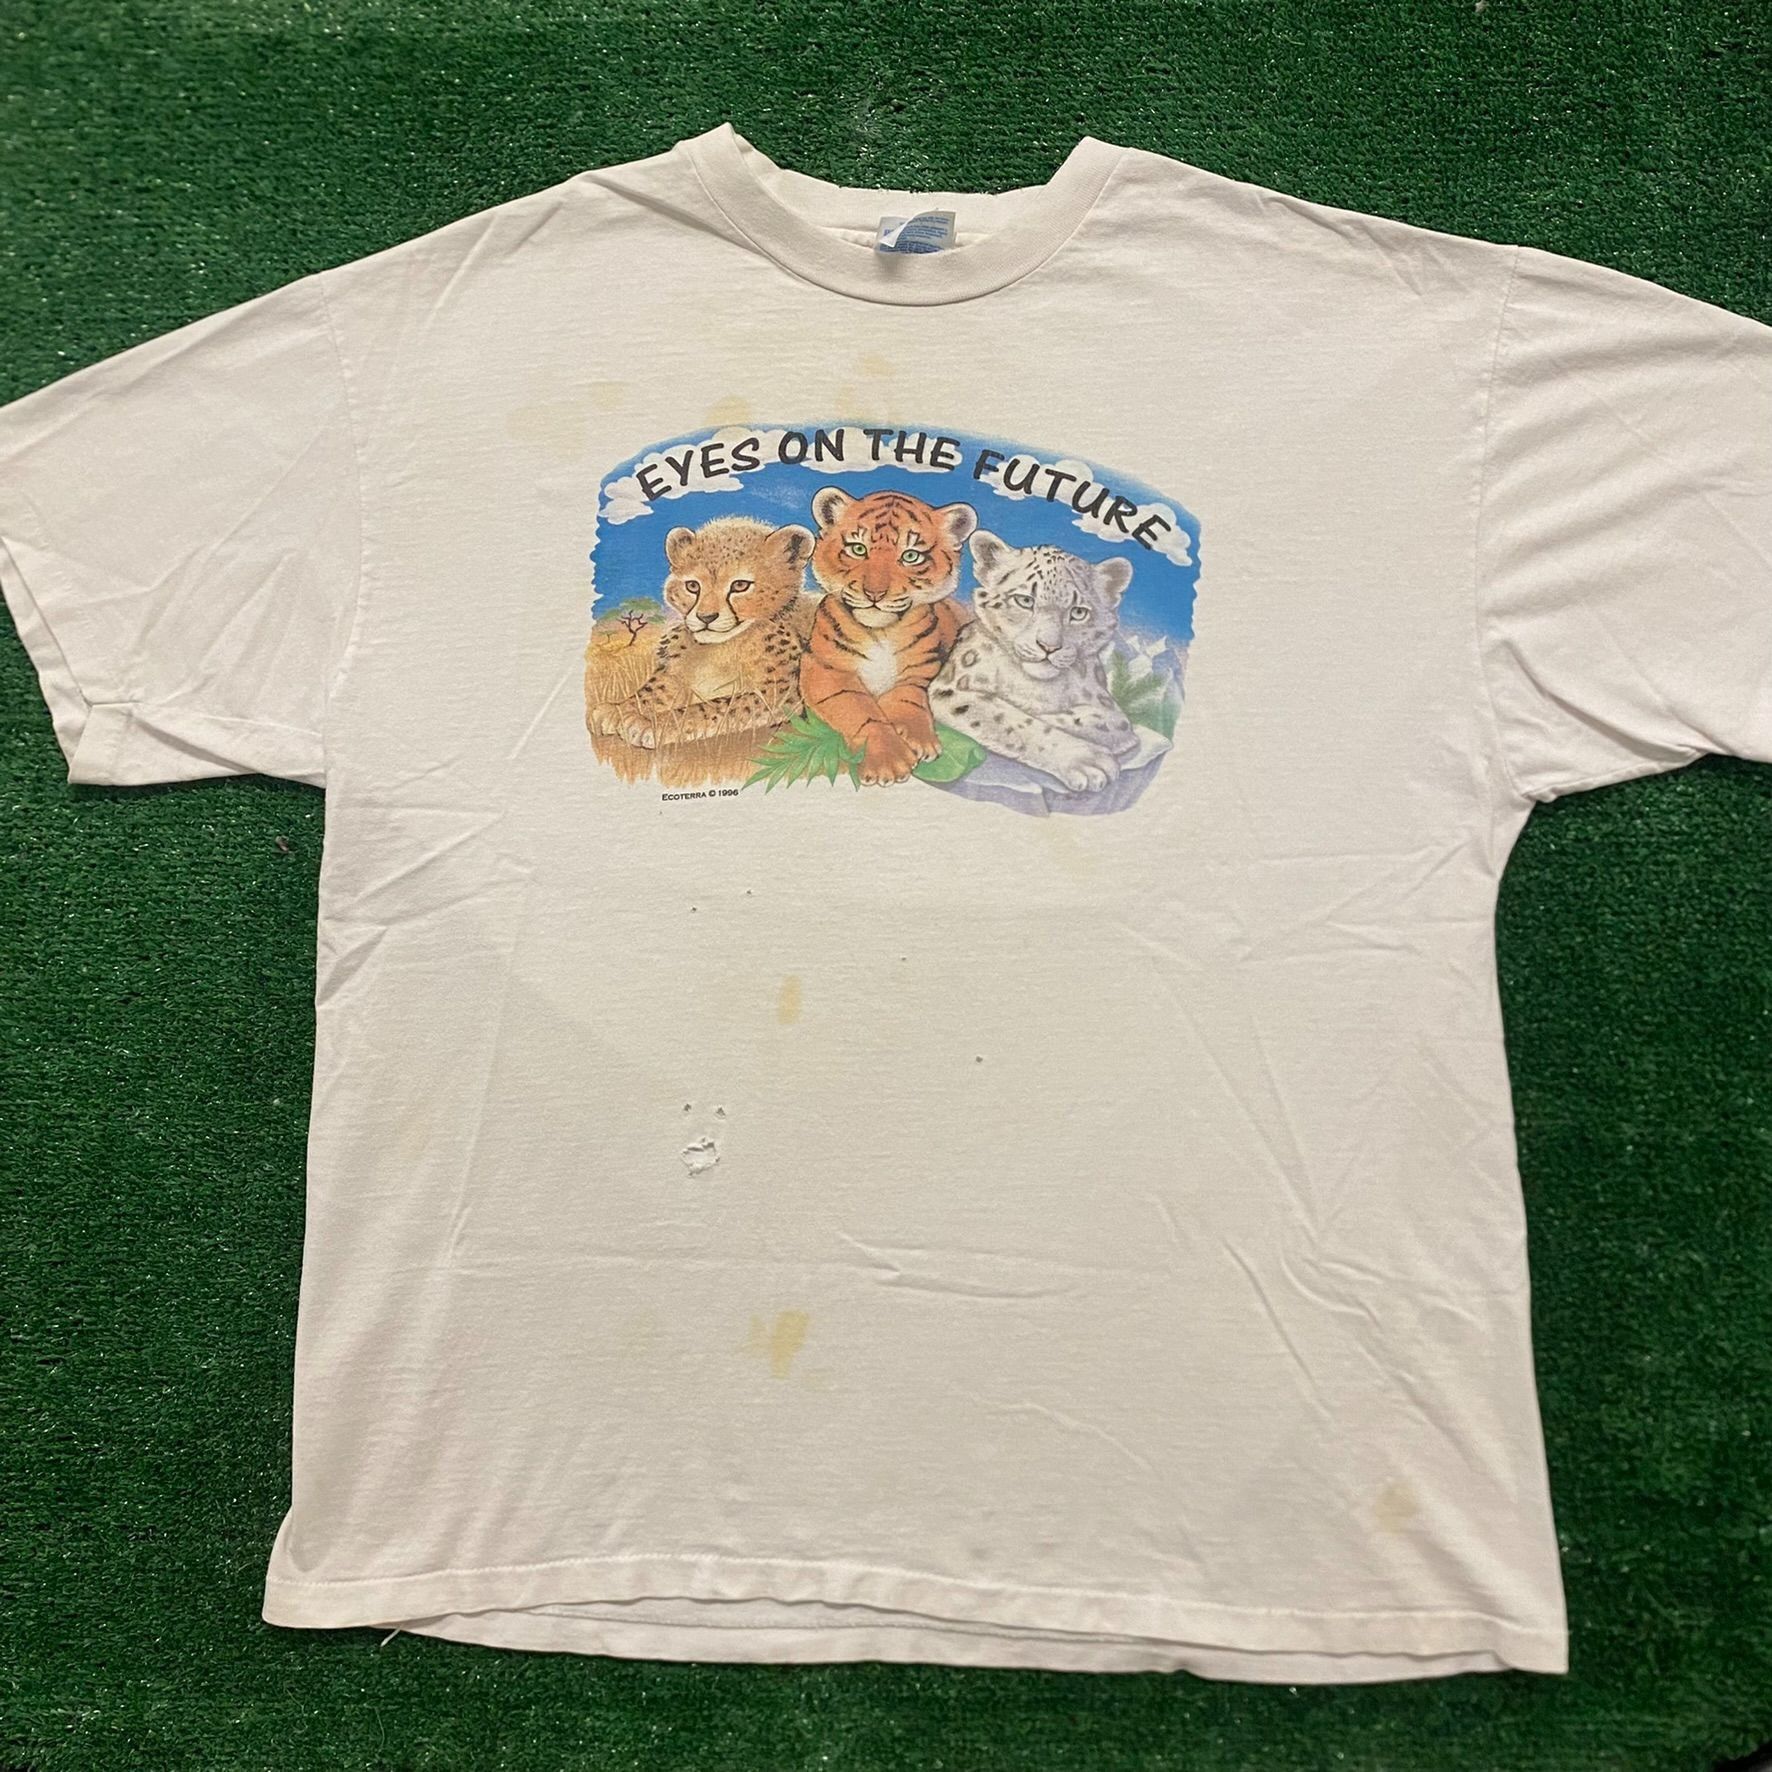 Vintage Cute Tiger Cubs Vintage 90s Baby Animals Nature T-Shirt Size US XL / EU 56 / 4 - 1 Preview